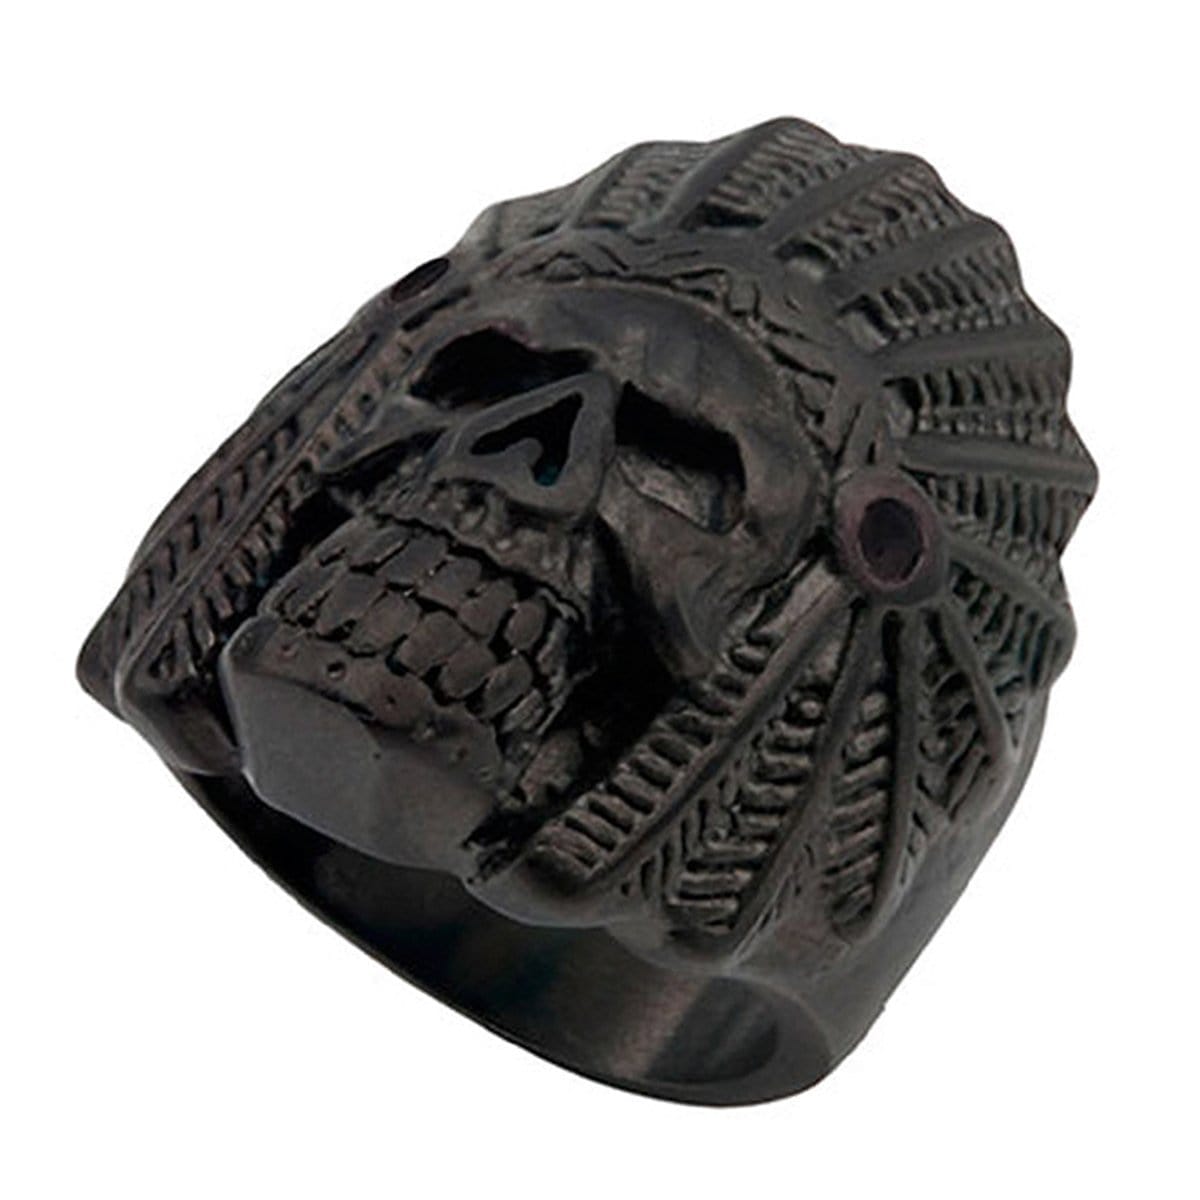 INOX JEWELRY Rings Black Stainless Steel Native American Tribal Chief Skull Ring